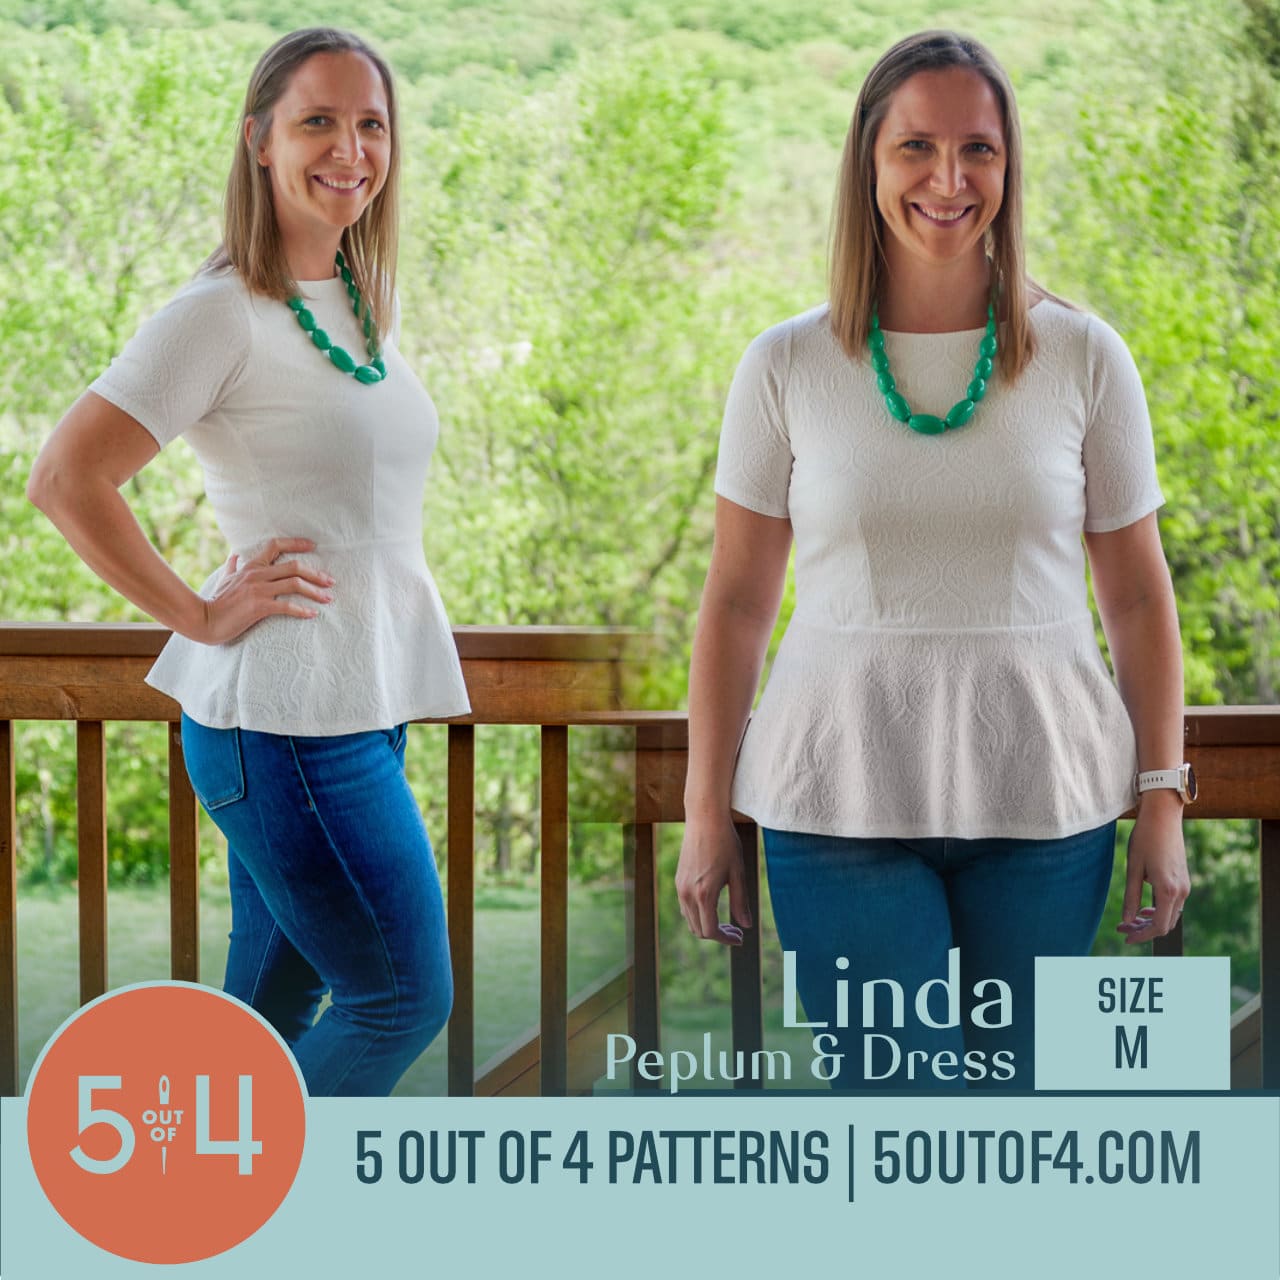 Linda Peplum and Dress - 5 out of 4 Patterns